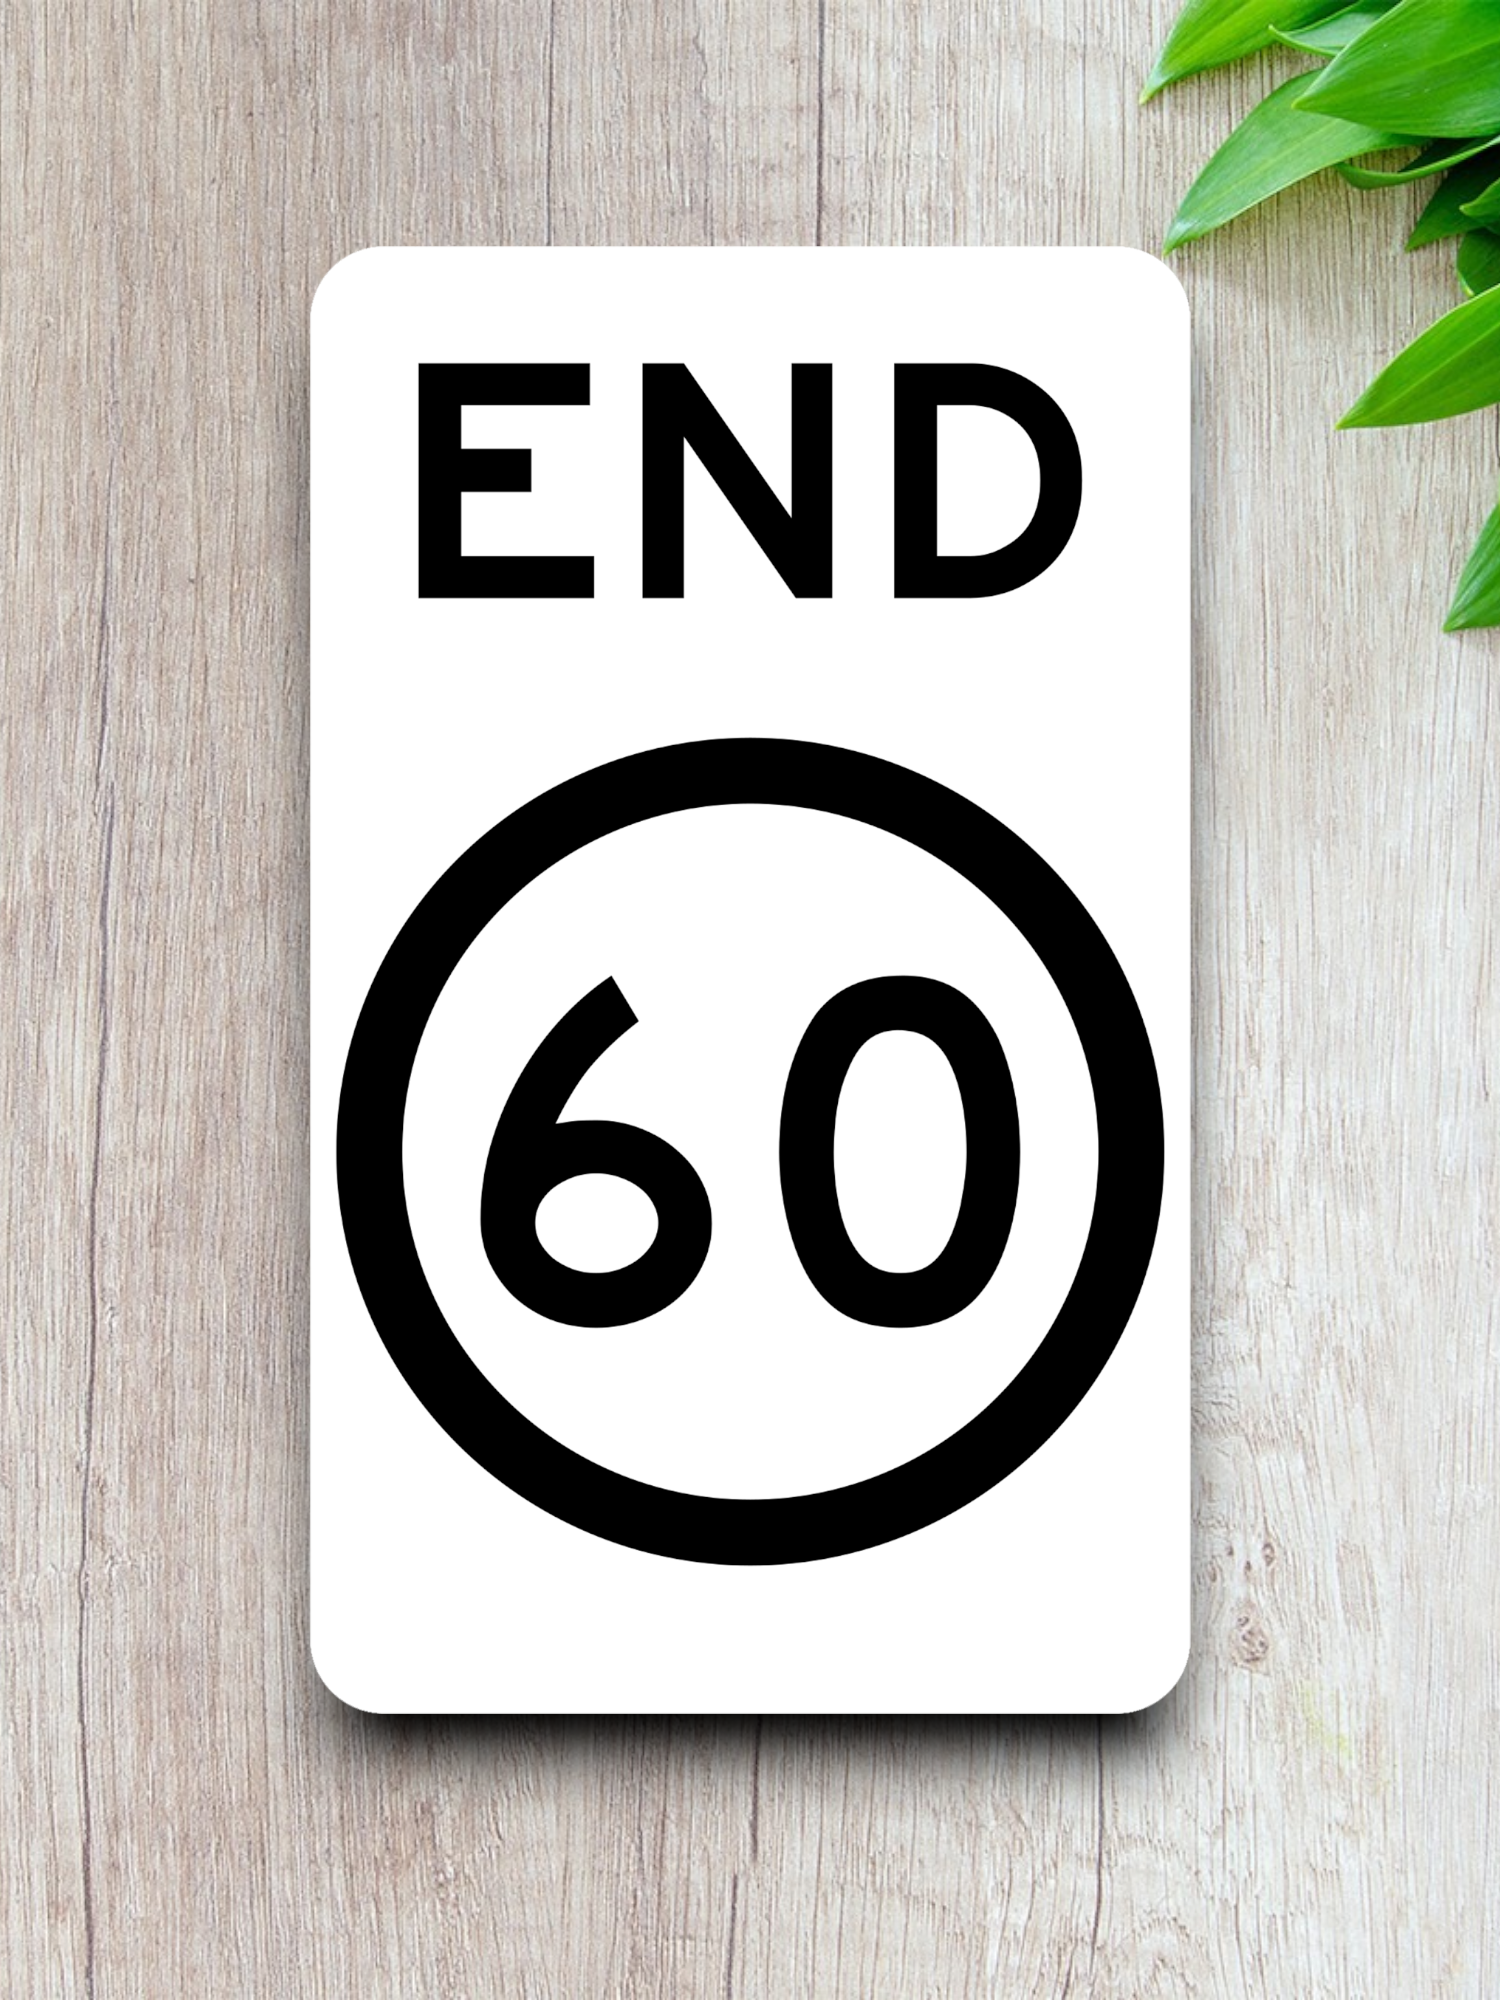 Australia road sign End 60 Speed Limit Sticker